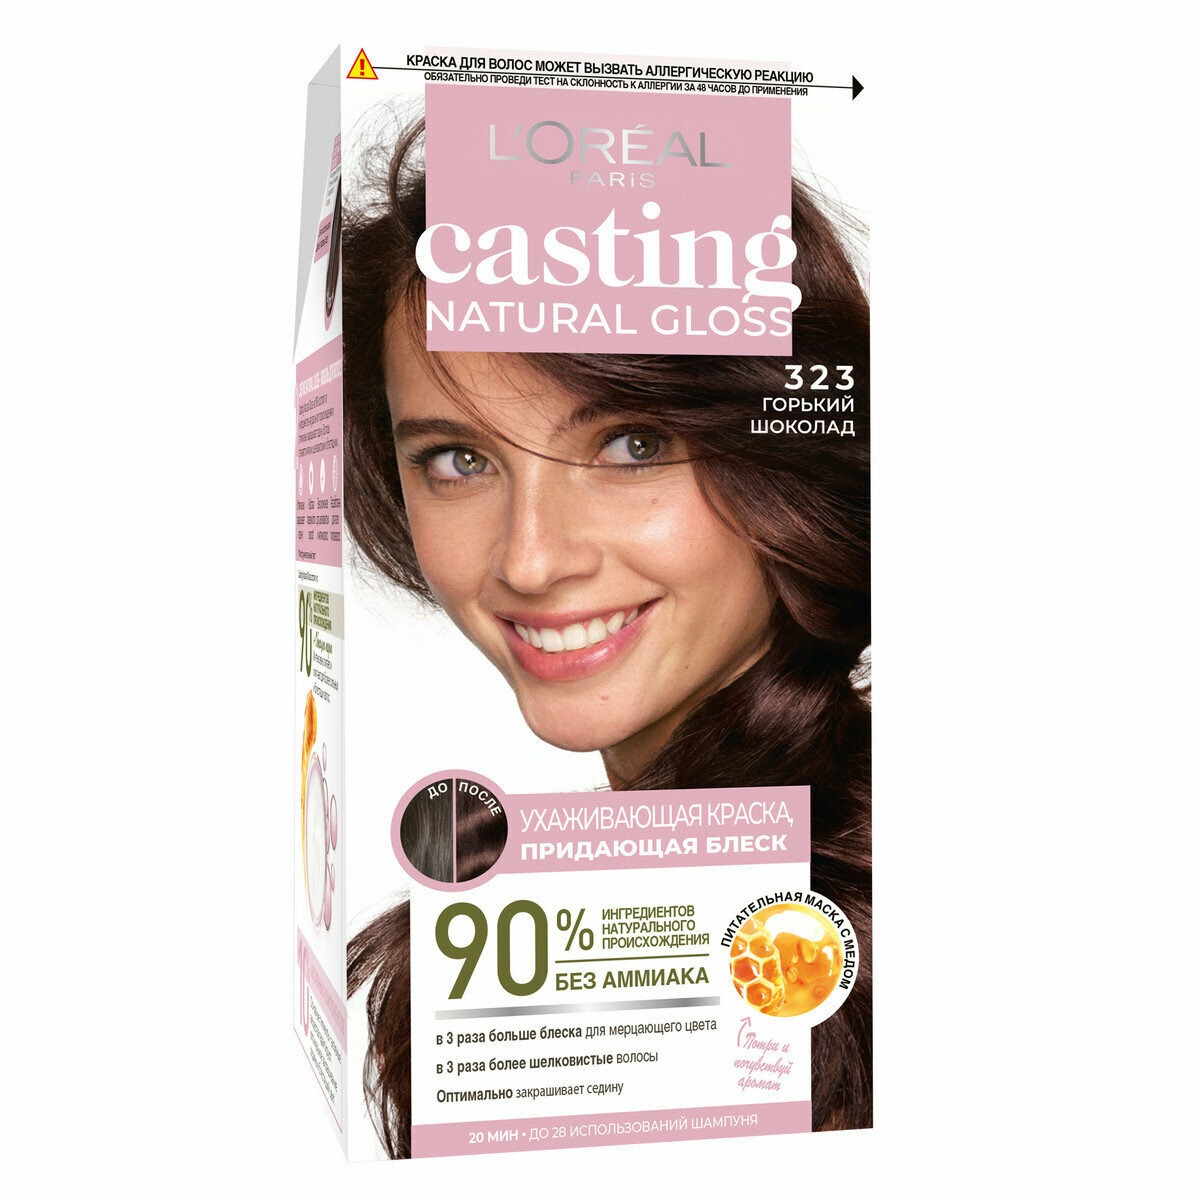 Краска для волос L'Oreal Casting Natural Gloss 323 Горький шоколад крем краска для волос studio professional 978 5 8 шоколад 100 мл базовая коллекция